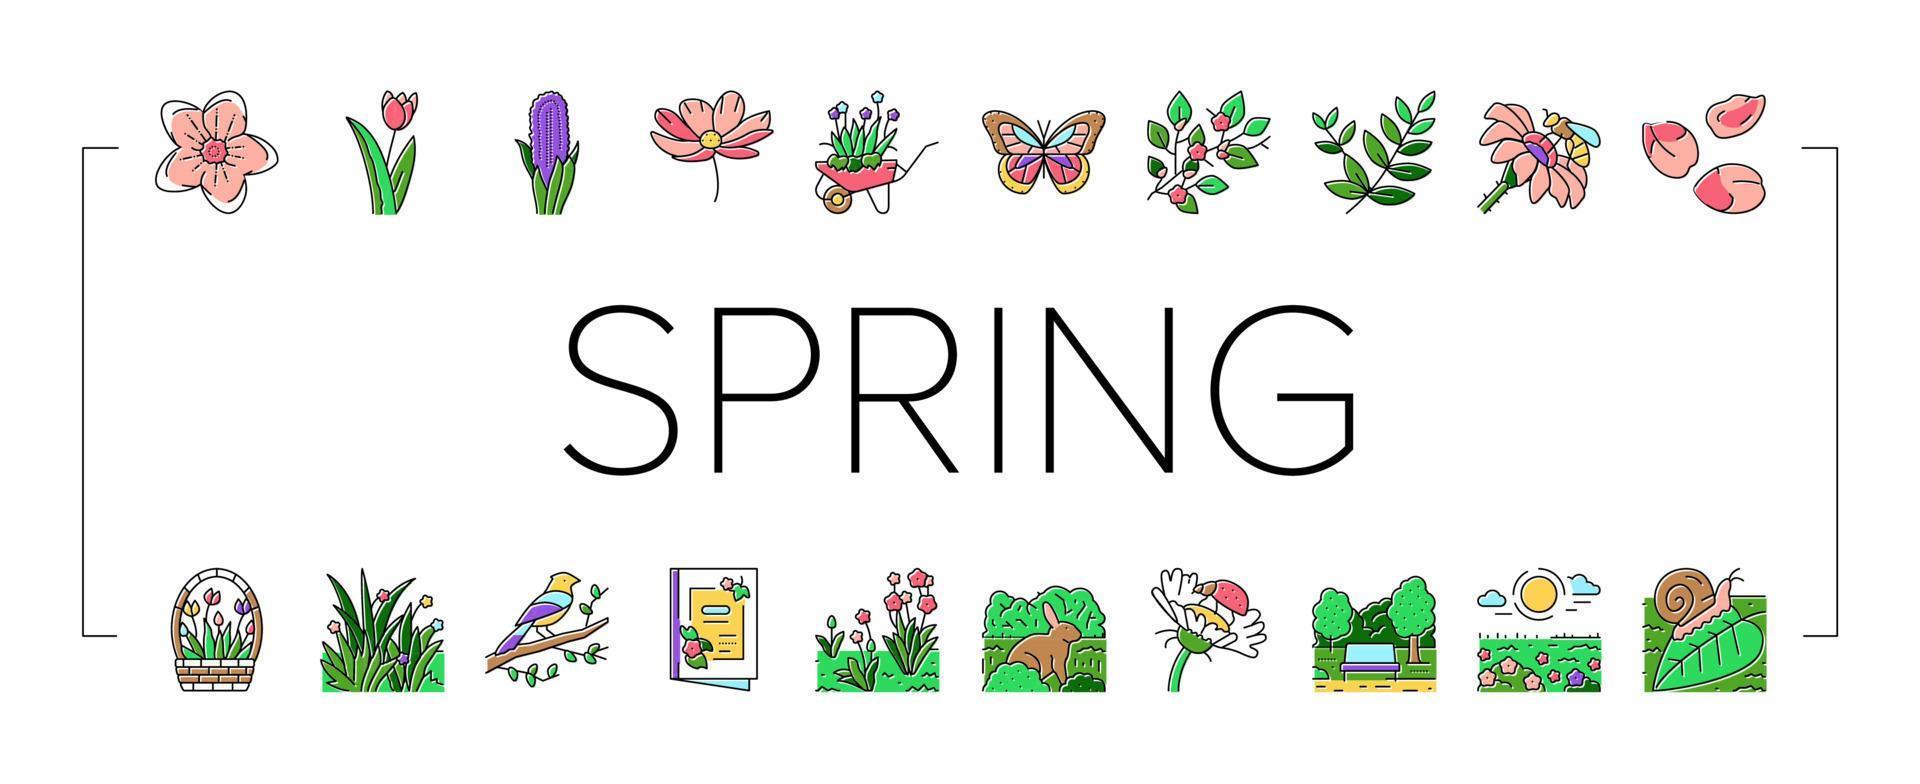 spring season flower nature icons set vector